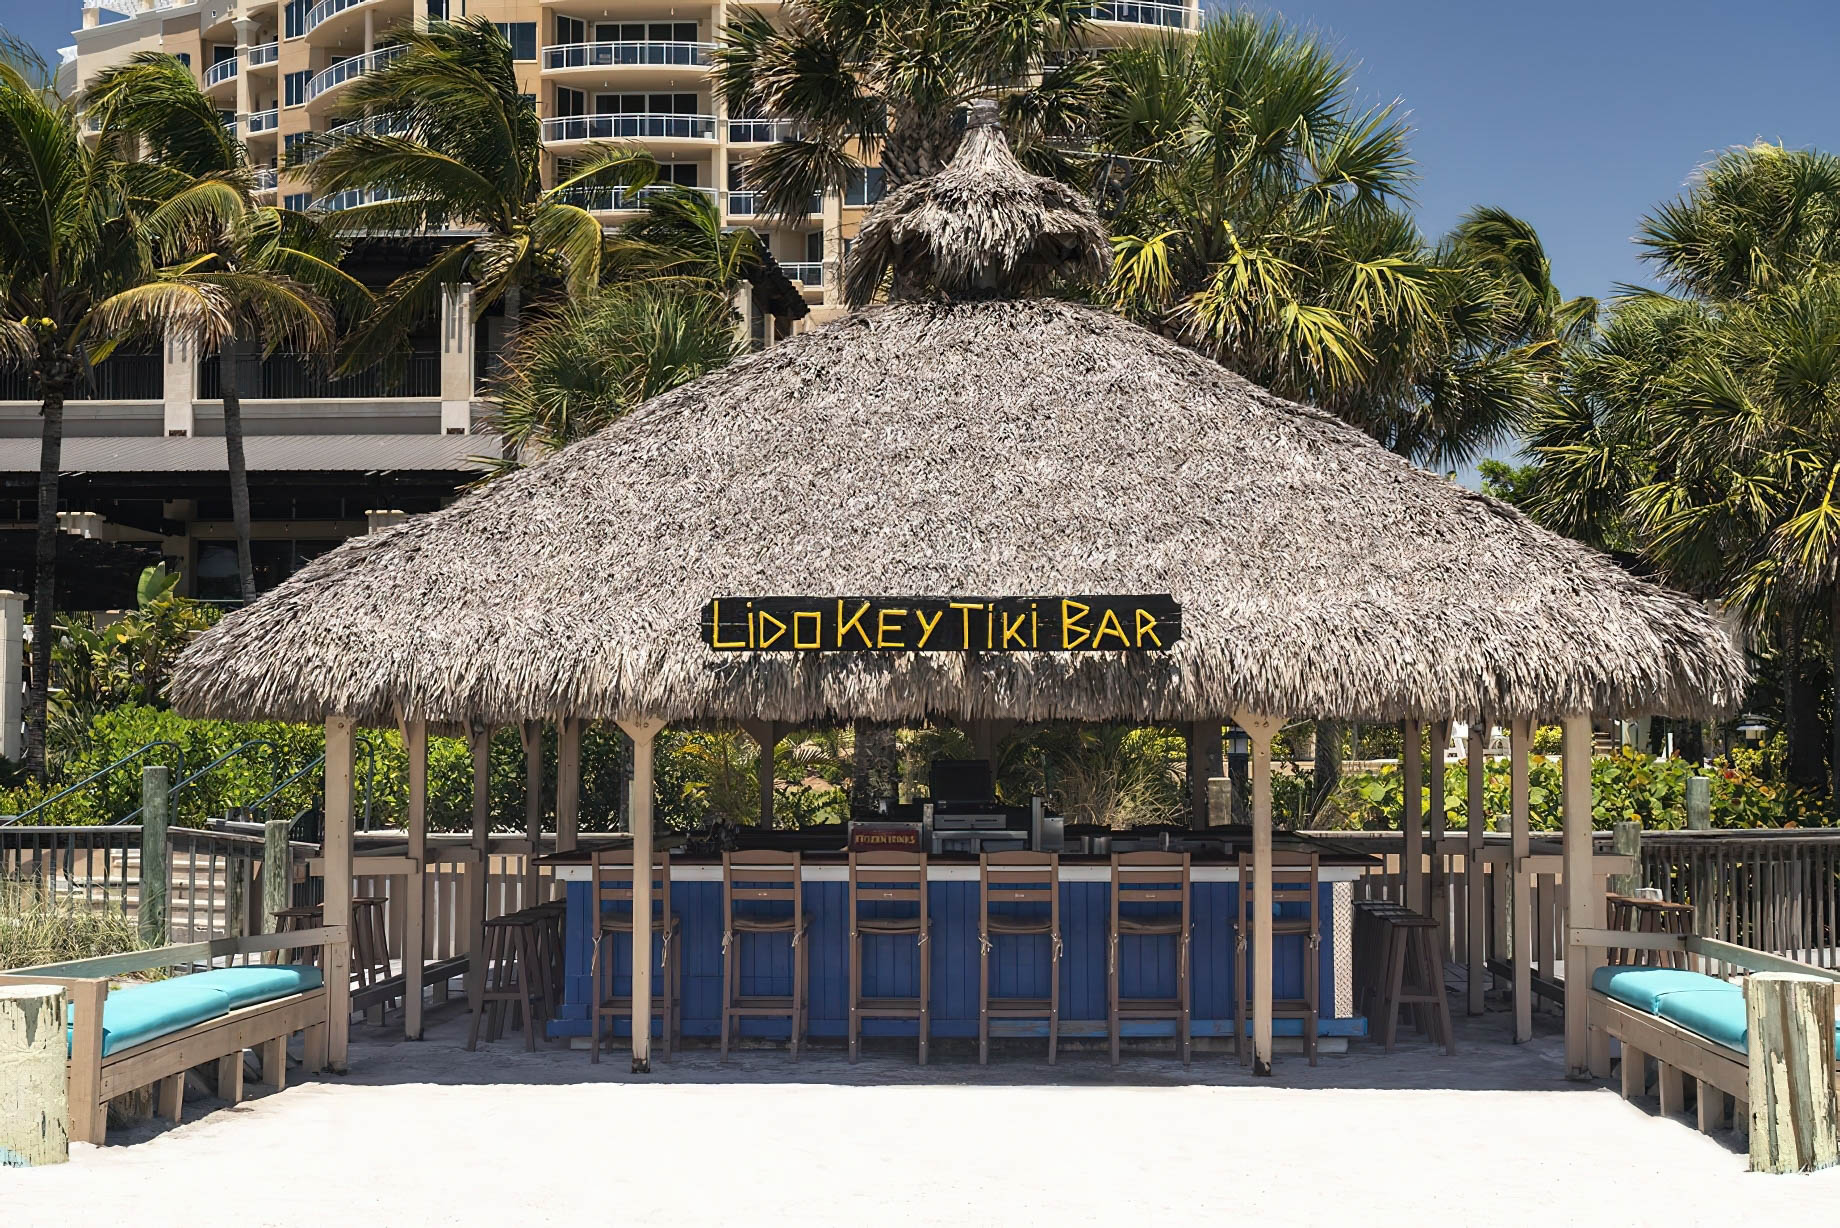 The Ritz-Carlton Beach Club Resort - Lido Key, Sarasota, FL, USA - The Lido Key Tiki Bar Front